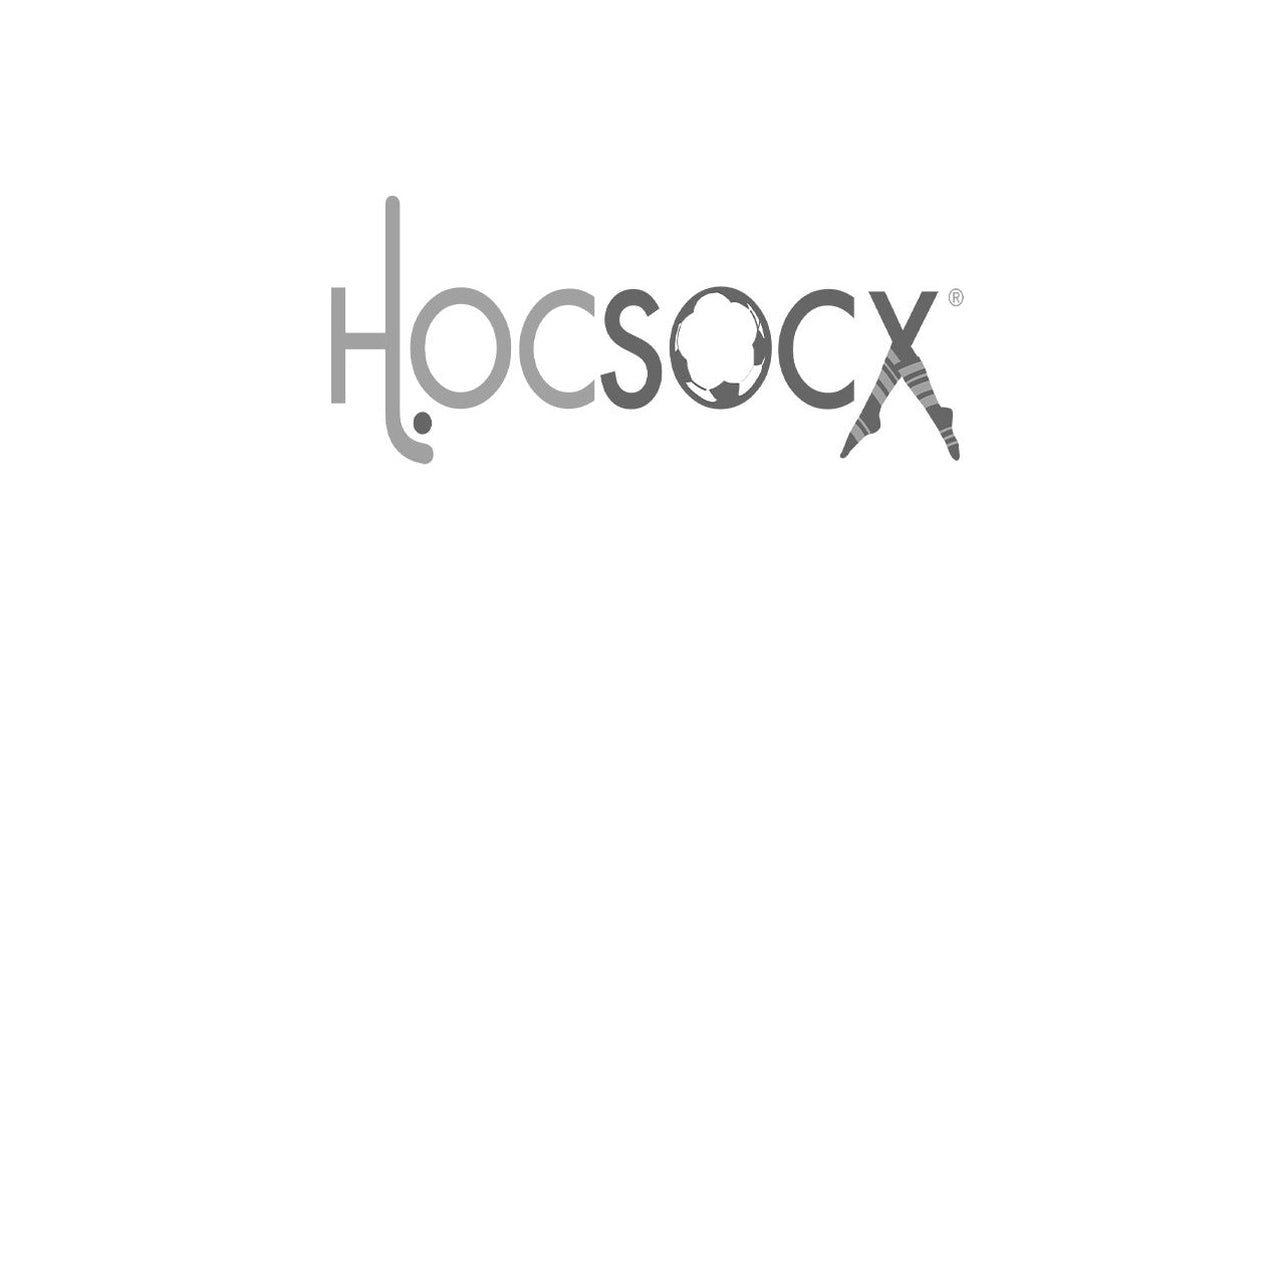 White Socks - Hocsocx Inc